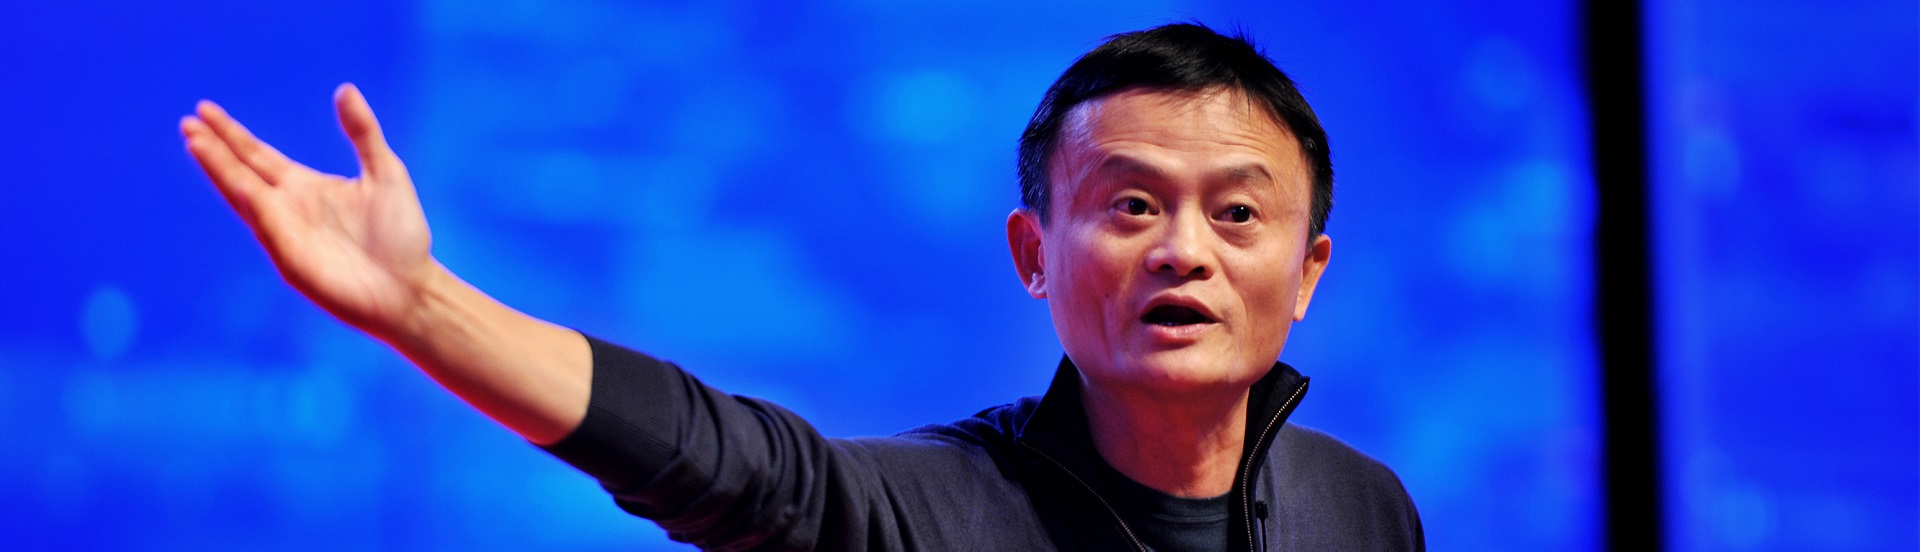 5 bài học khởi nghiệp kinh doanh từ Jack Ma (P2)